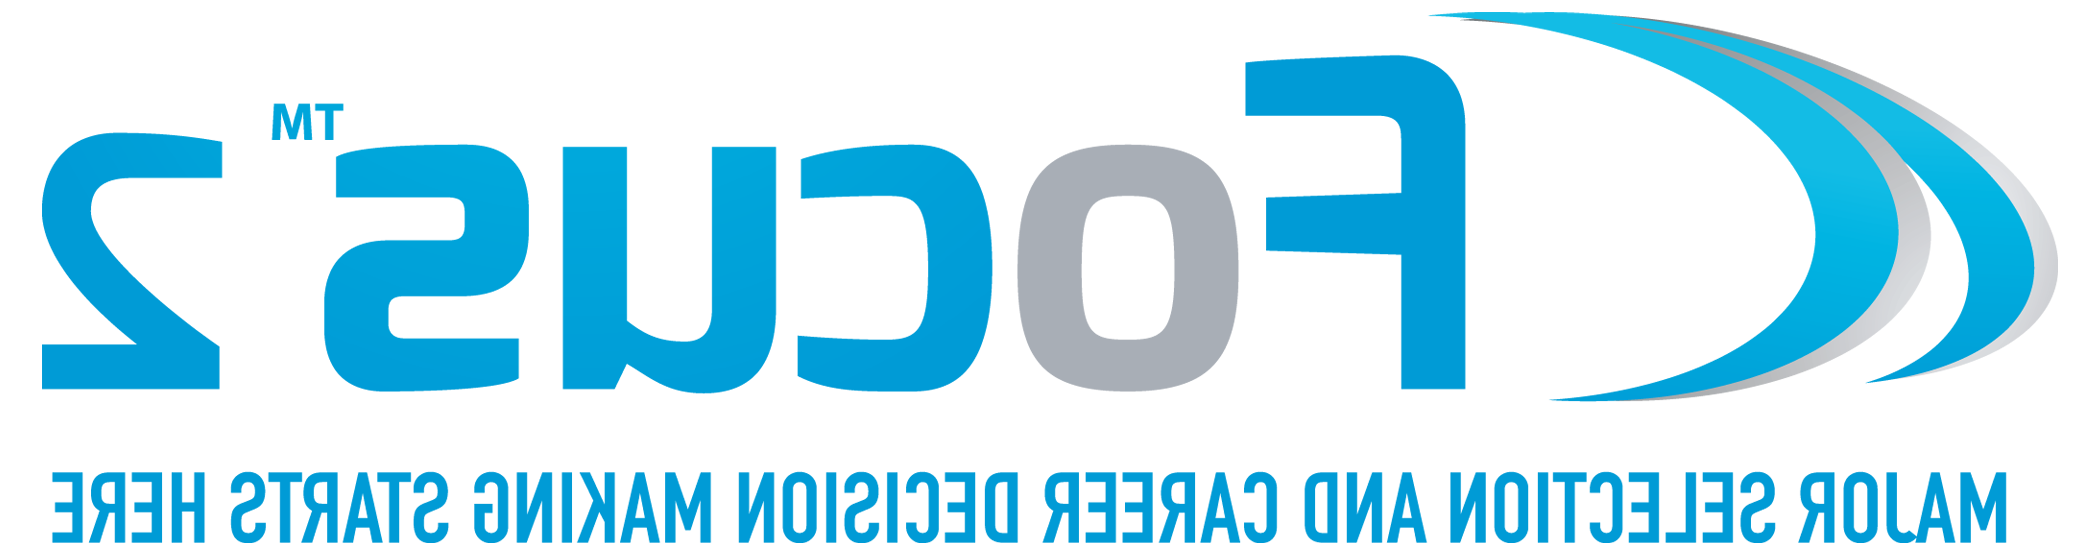 Focus 2 职业生涯 Logo